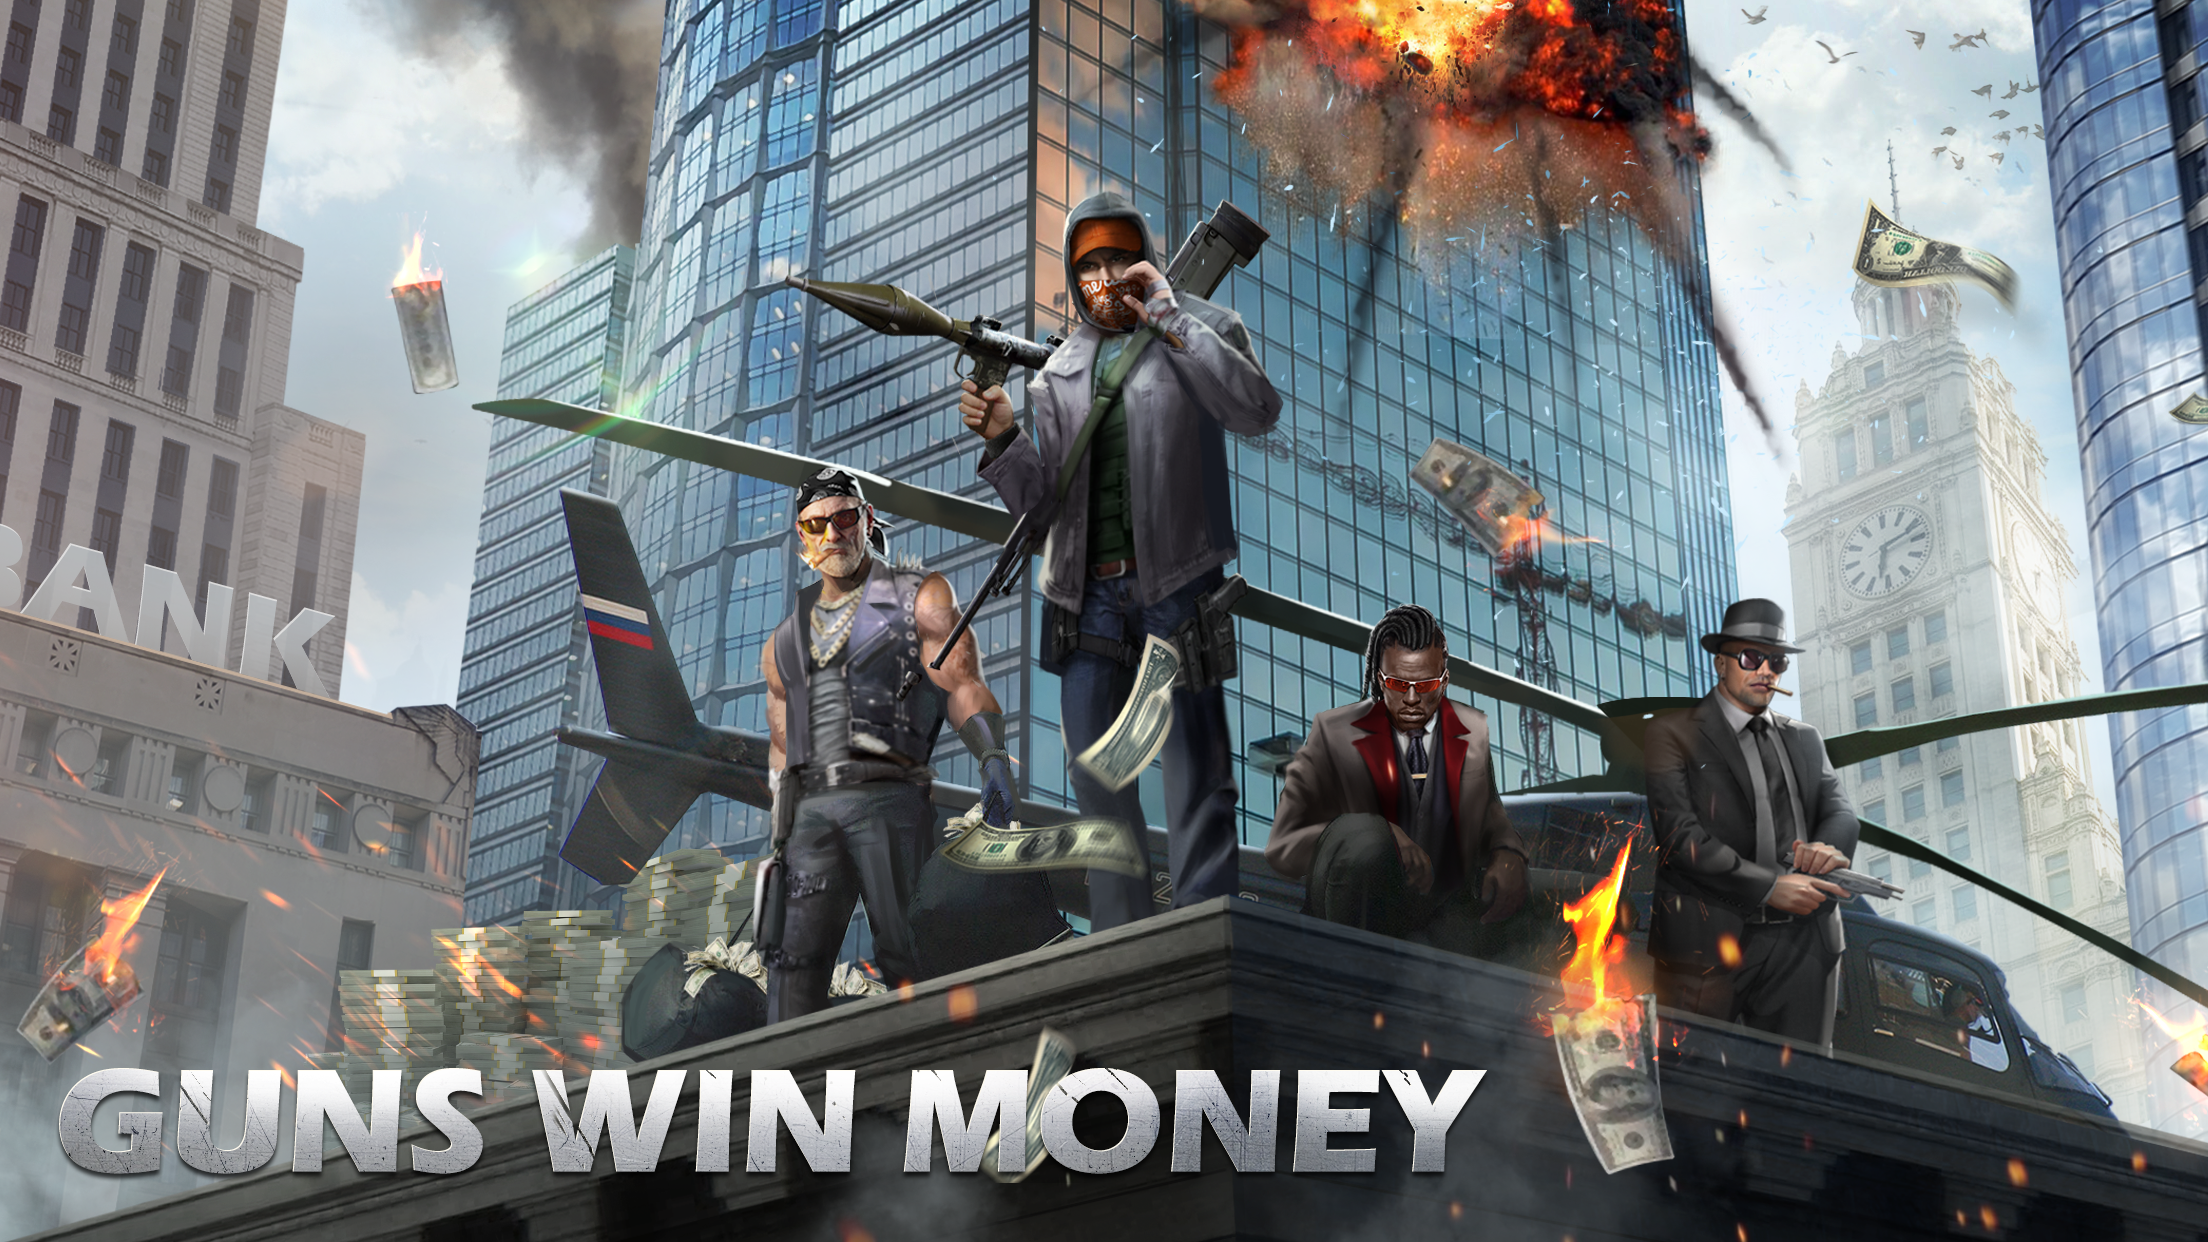 War Elite: City Survival ภาพหน้าจอเกม